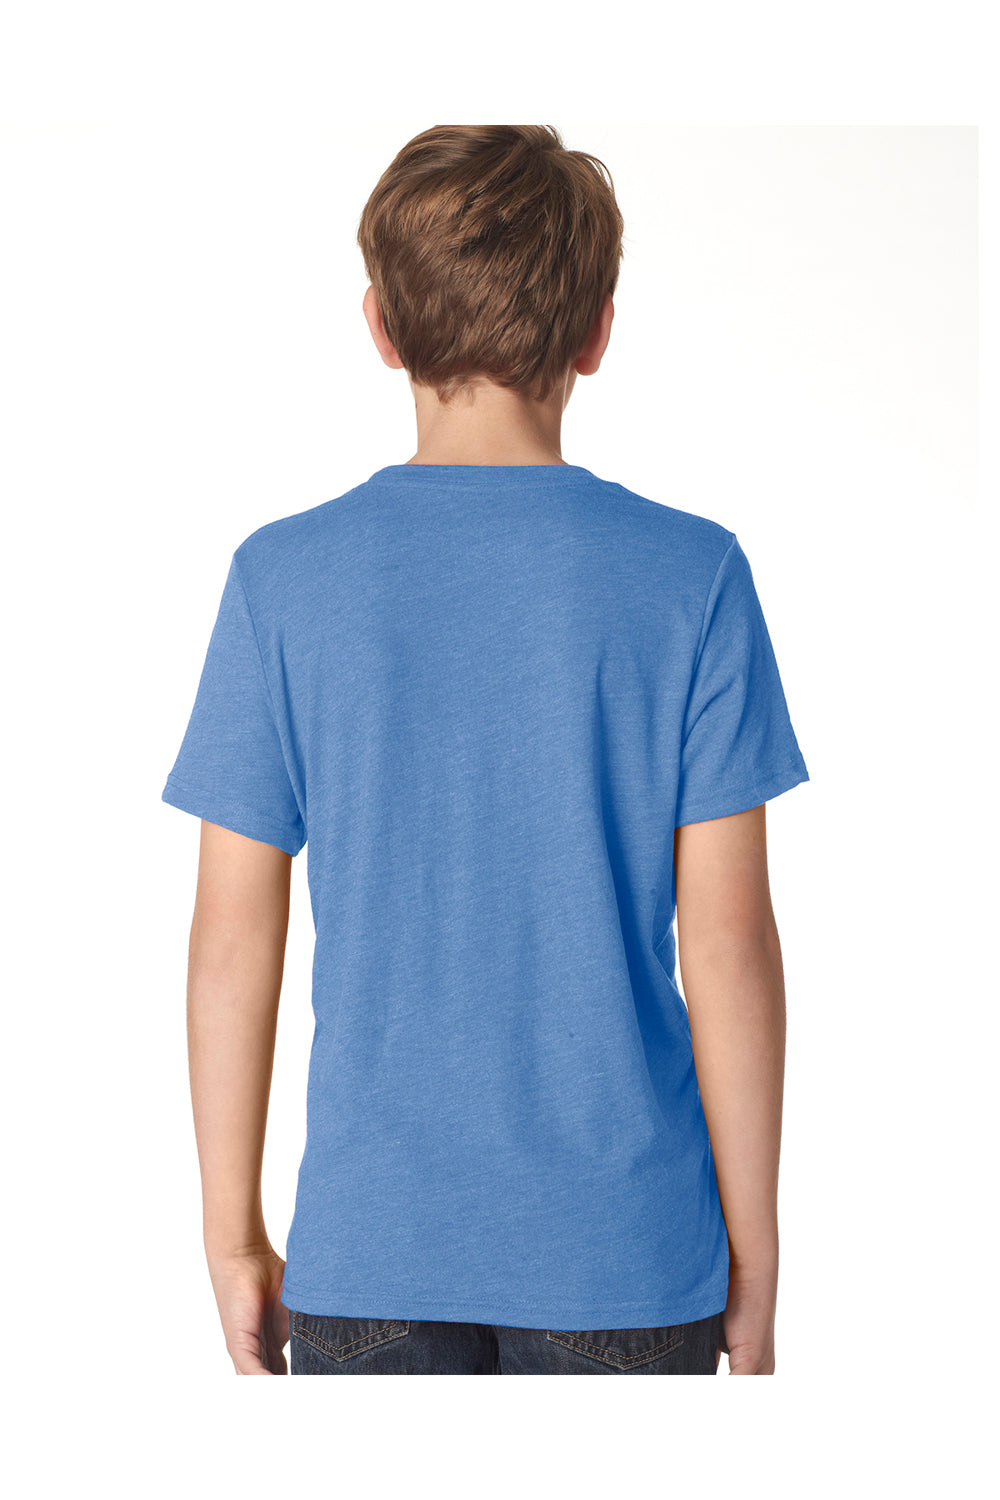 Next Level N6310 Youth Jersey Short Sleeve Crewneck T-Shirt Royal Blue Back